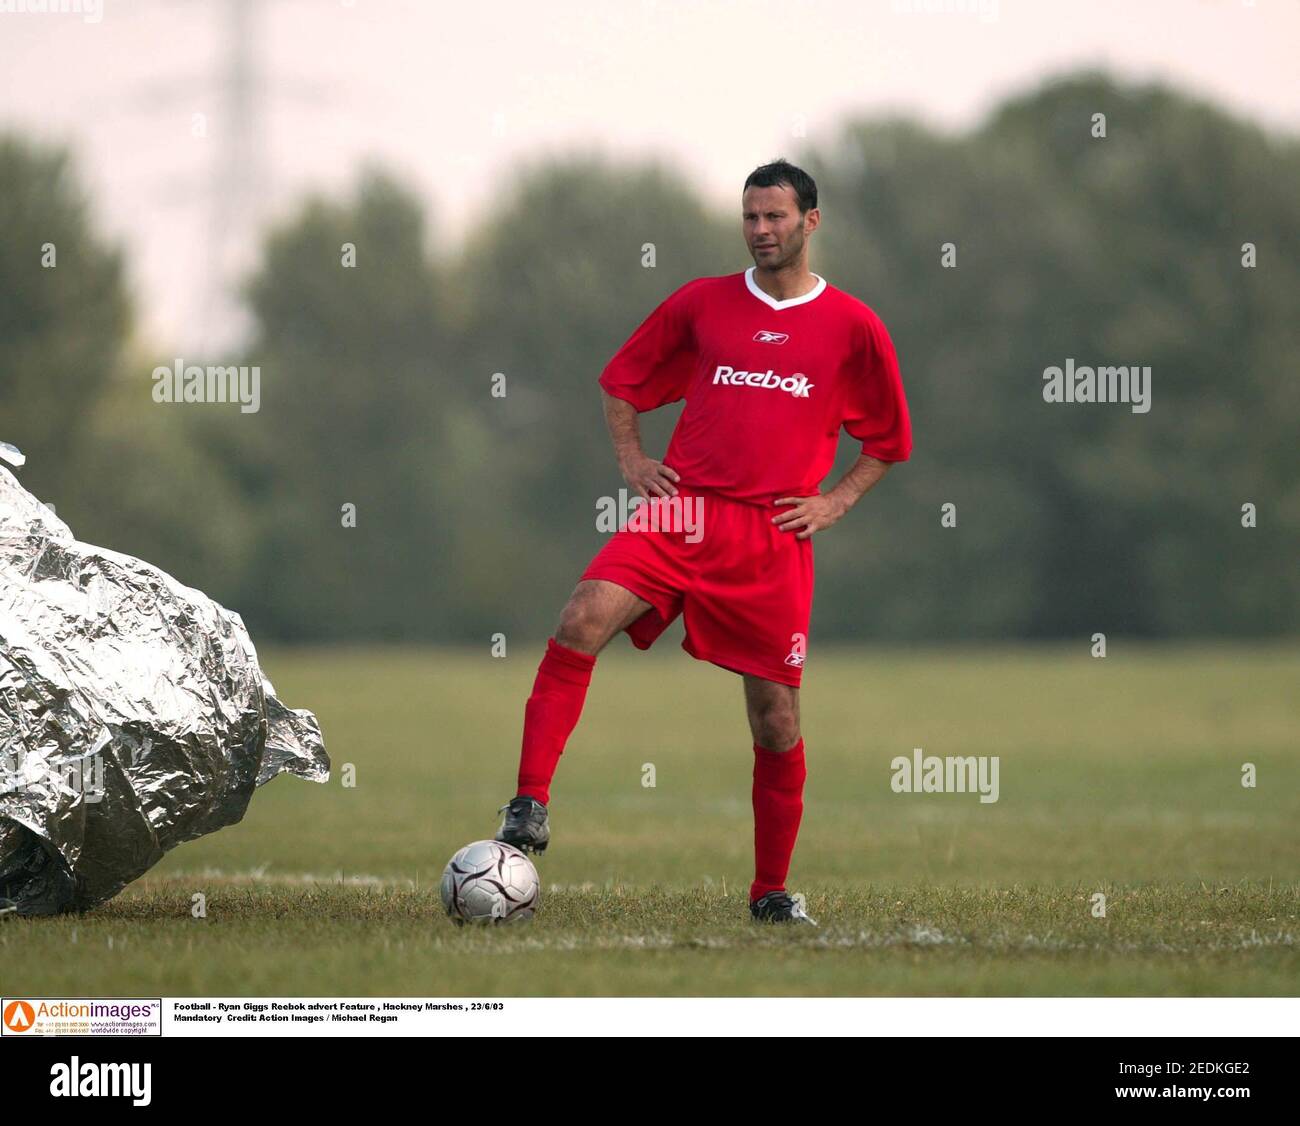 Football - Ryan Giggs Reebok advert Feature , Hackney Marshes , 23/6/03  Mandatory Credit: Action Images / Michael Regan Stock Photo - Alamy